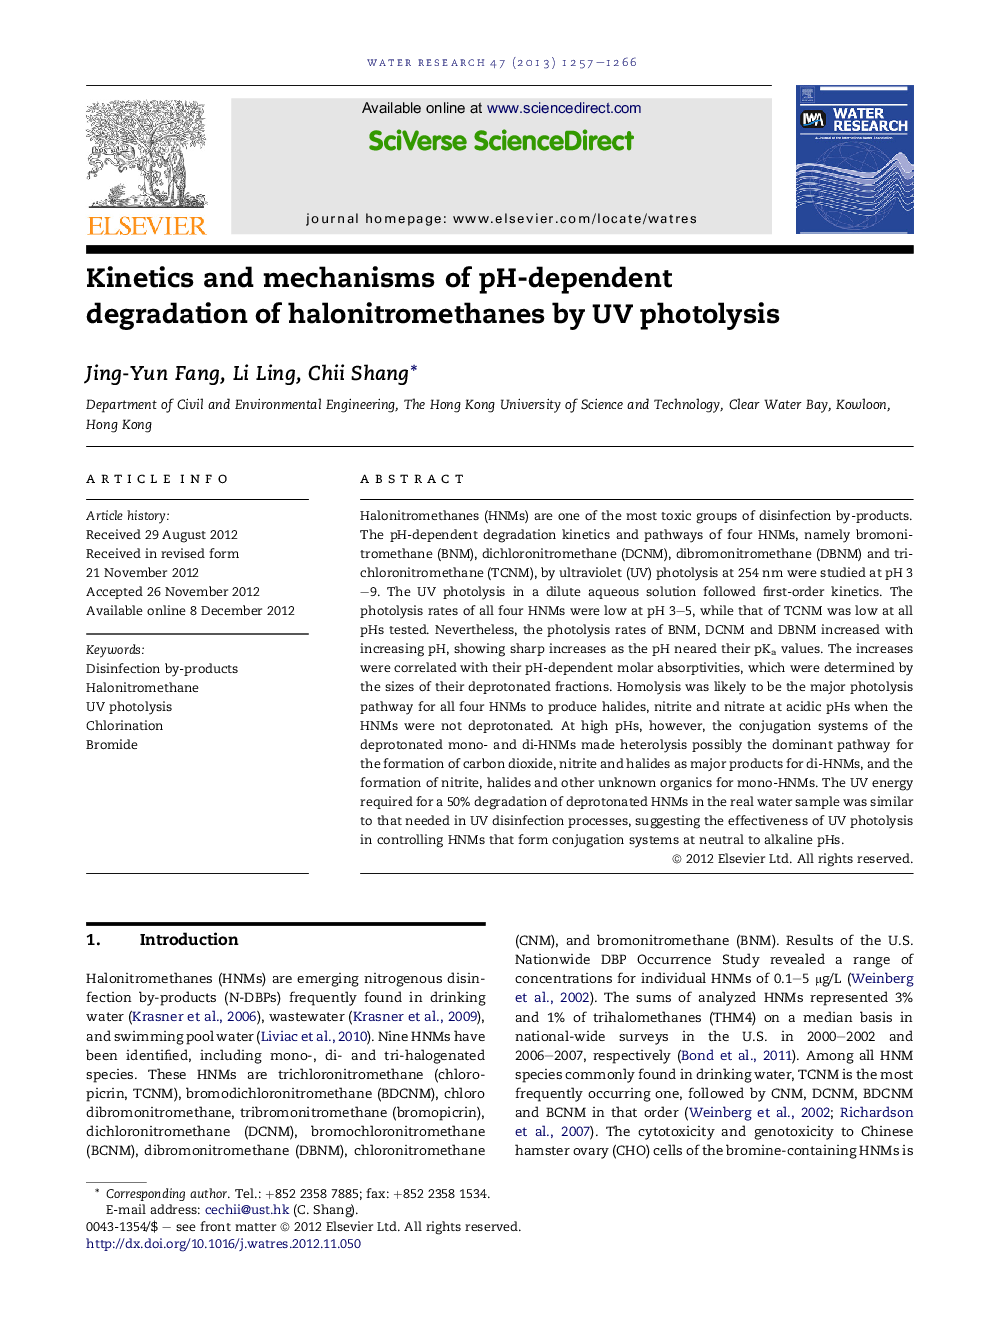 Kinetics and mechanisms of pH-dependent degradation of halonitromethanes by UV photolysis